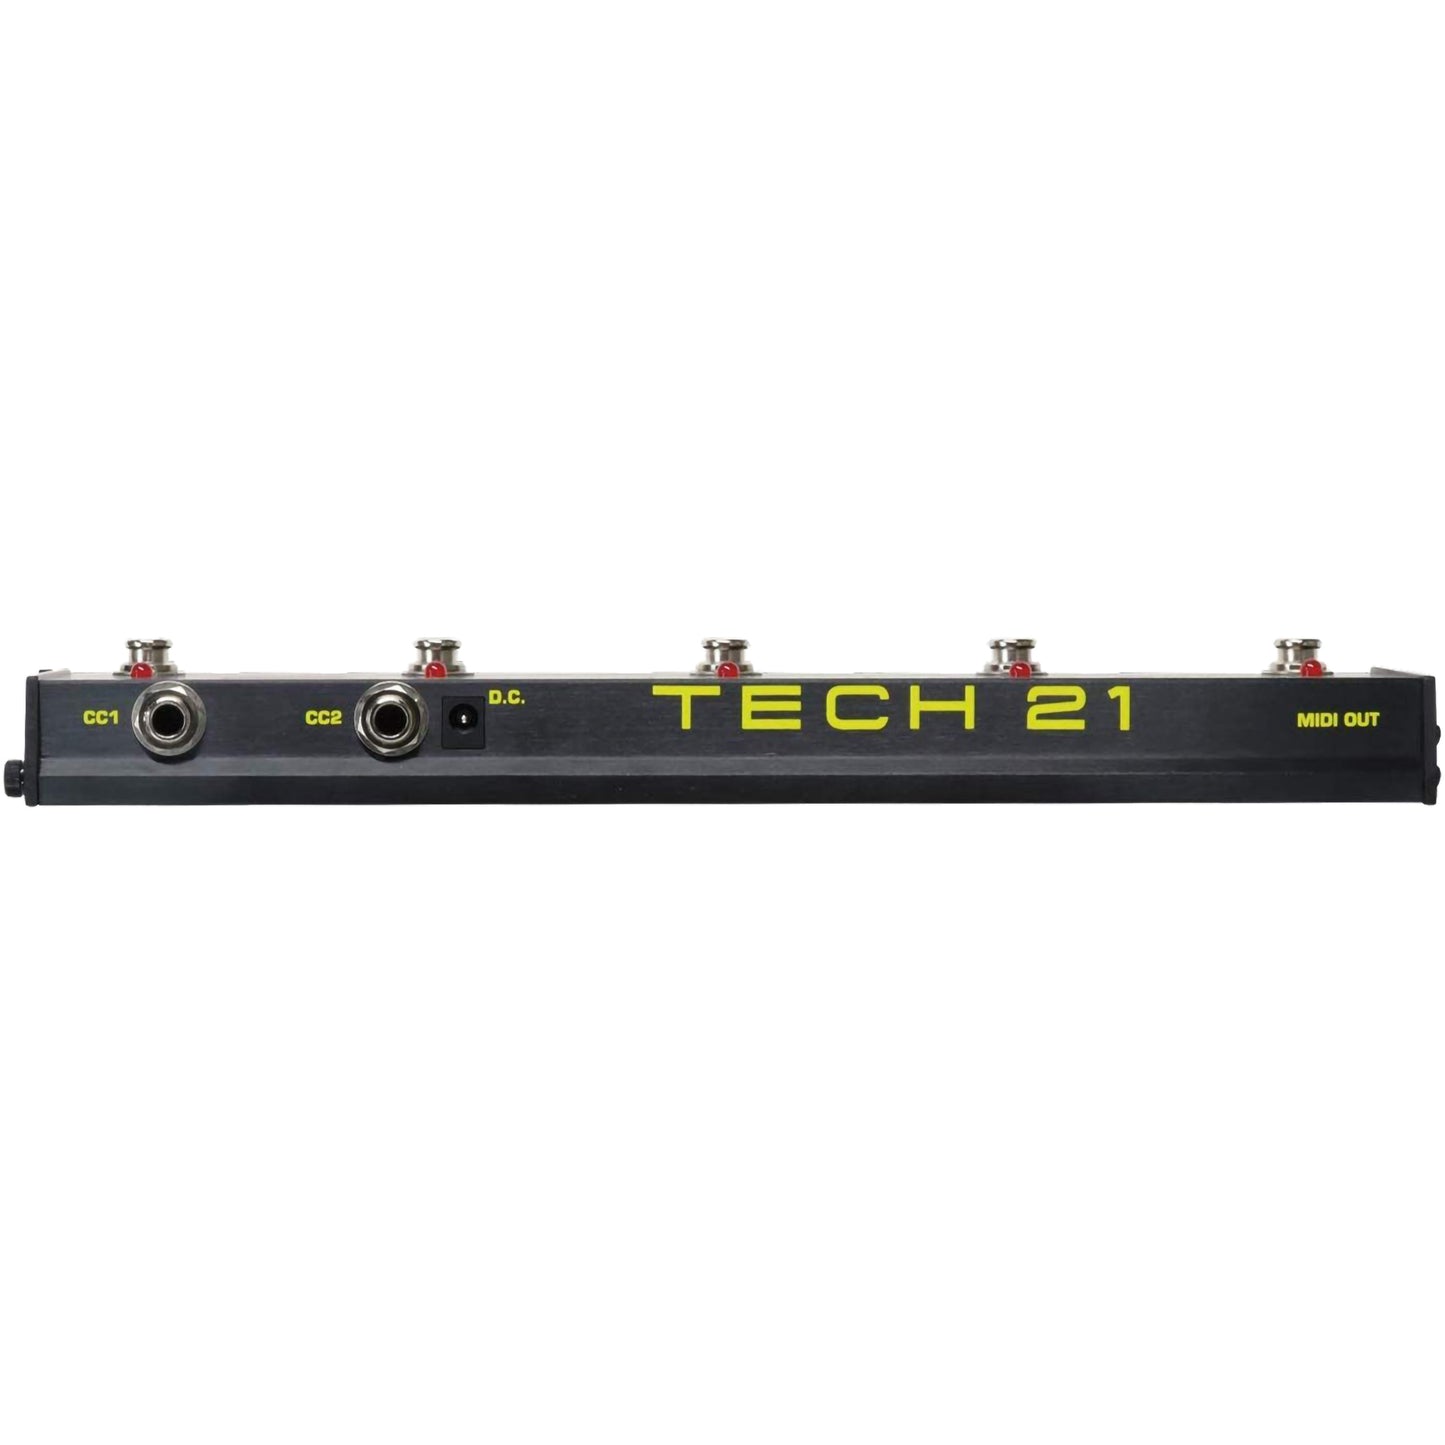 Tech 21 MIDI Mongoose Pedal